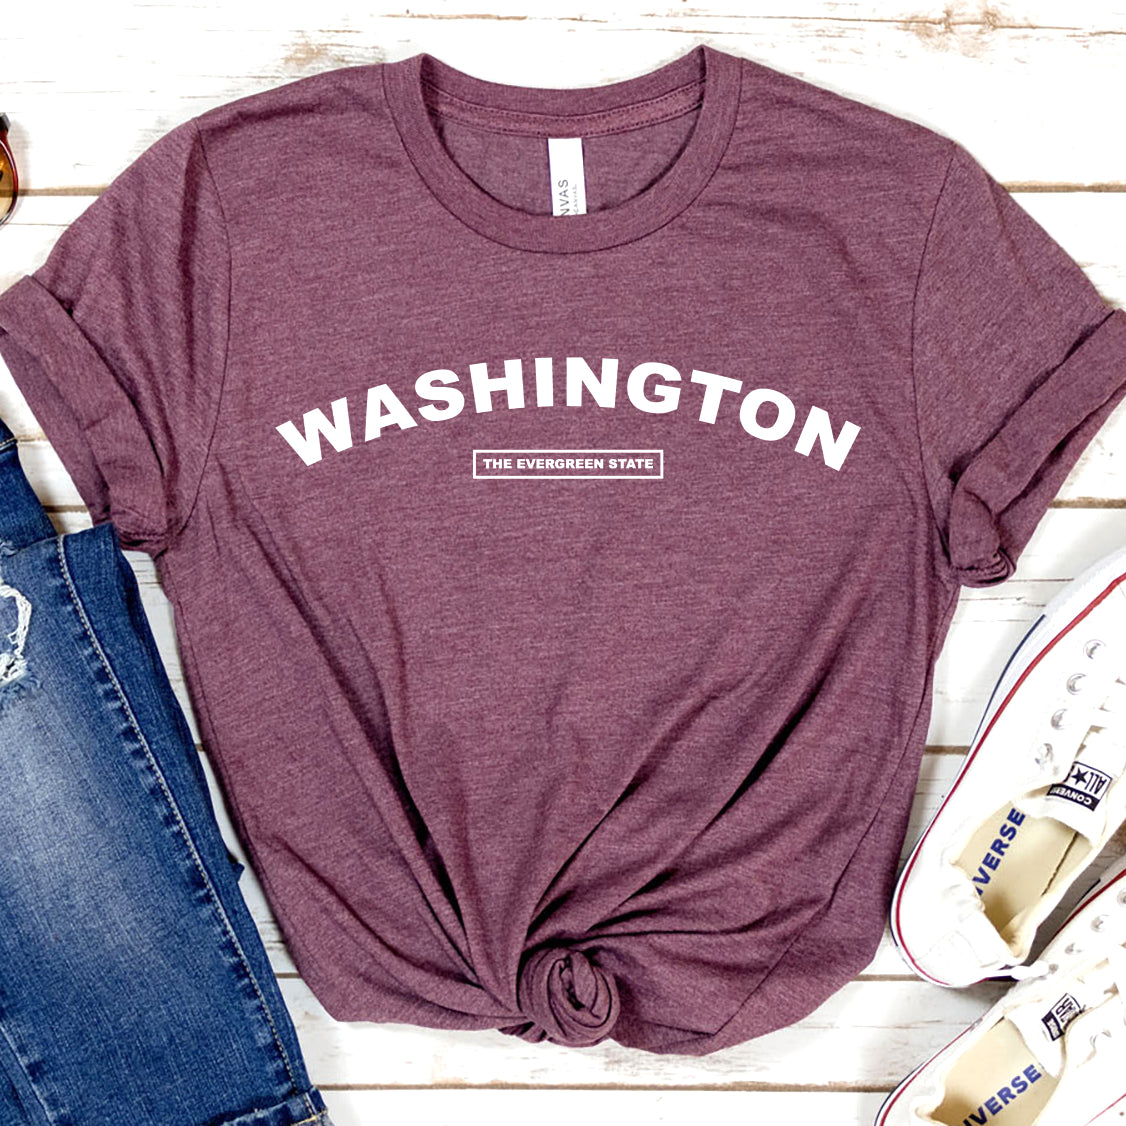 Washington The Evergreen State T-shirt - United States Name & Slogan Minimal Design Printed Tee Shirt